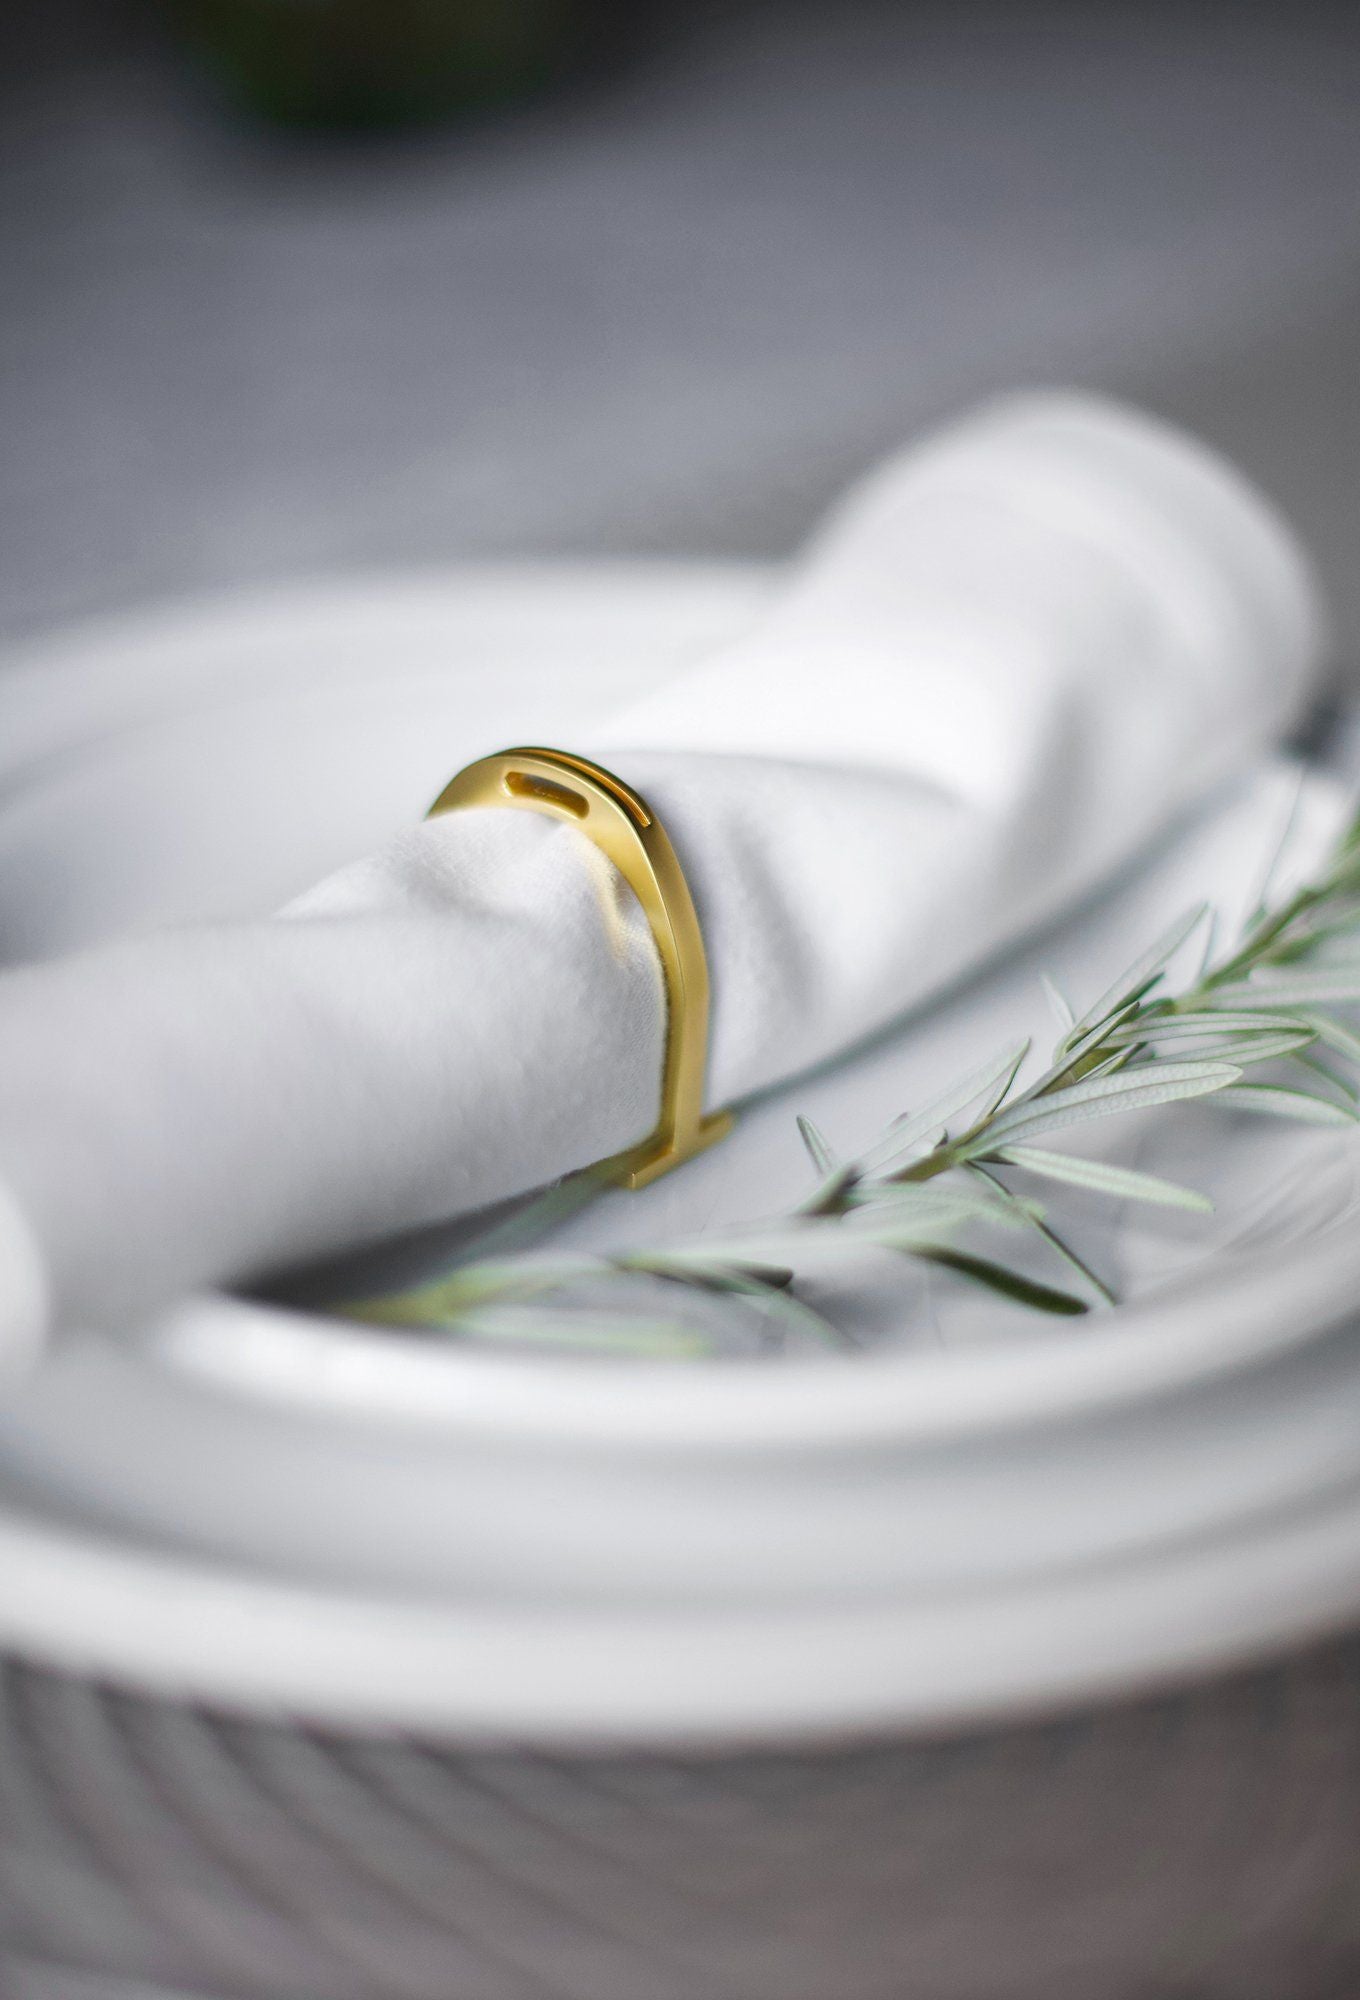 Gold napkin rings holding white napkins.